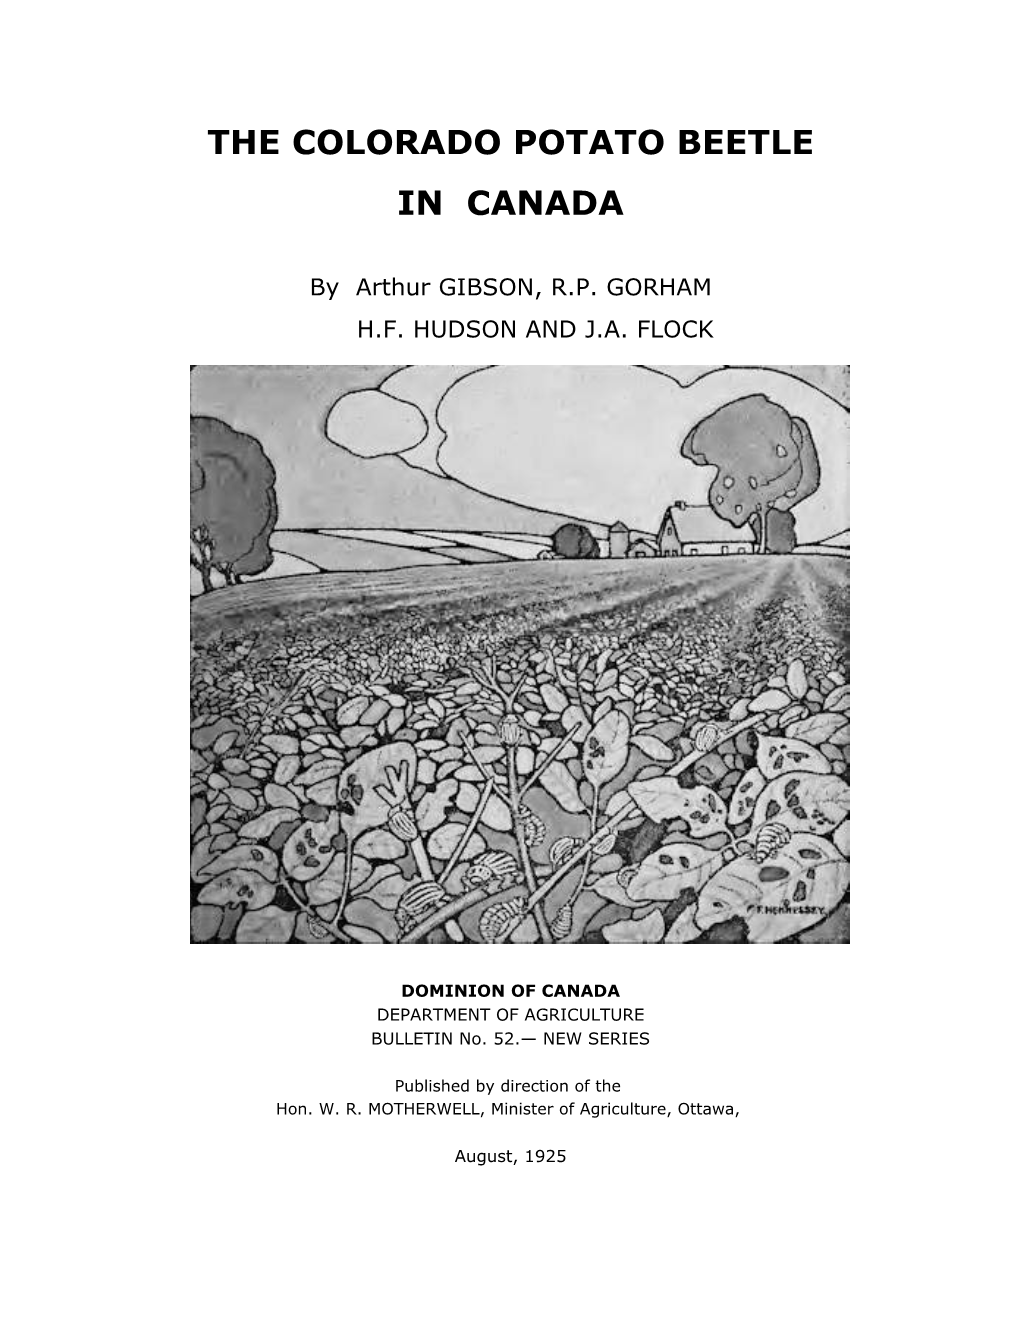 The Colorado Potato Beetle in Canada. Bull. 52, August, 1925